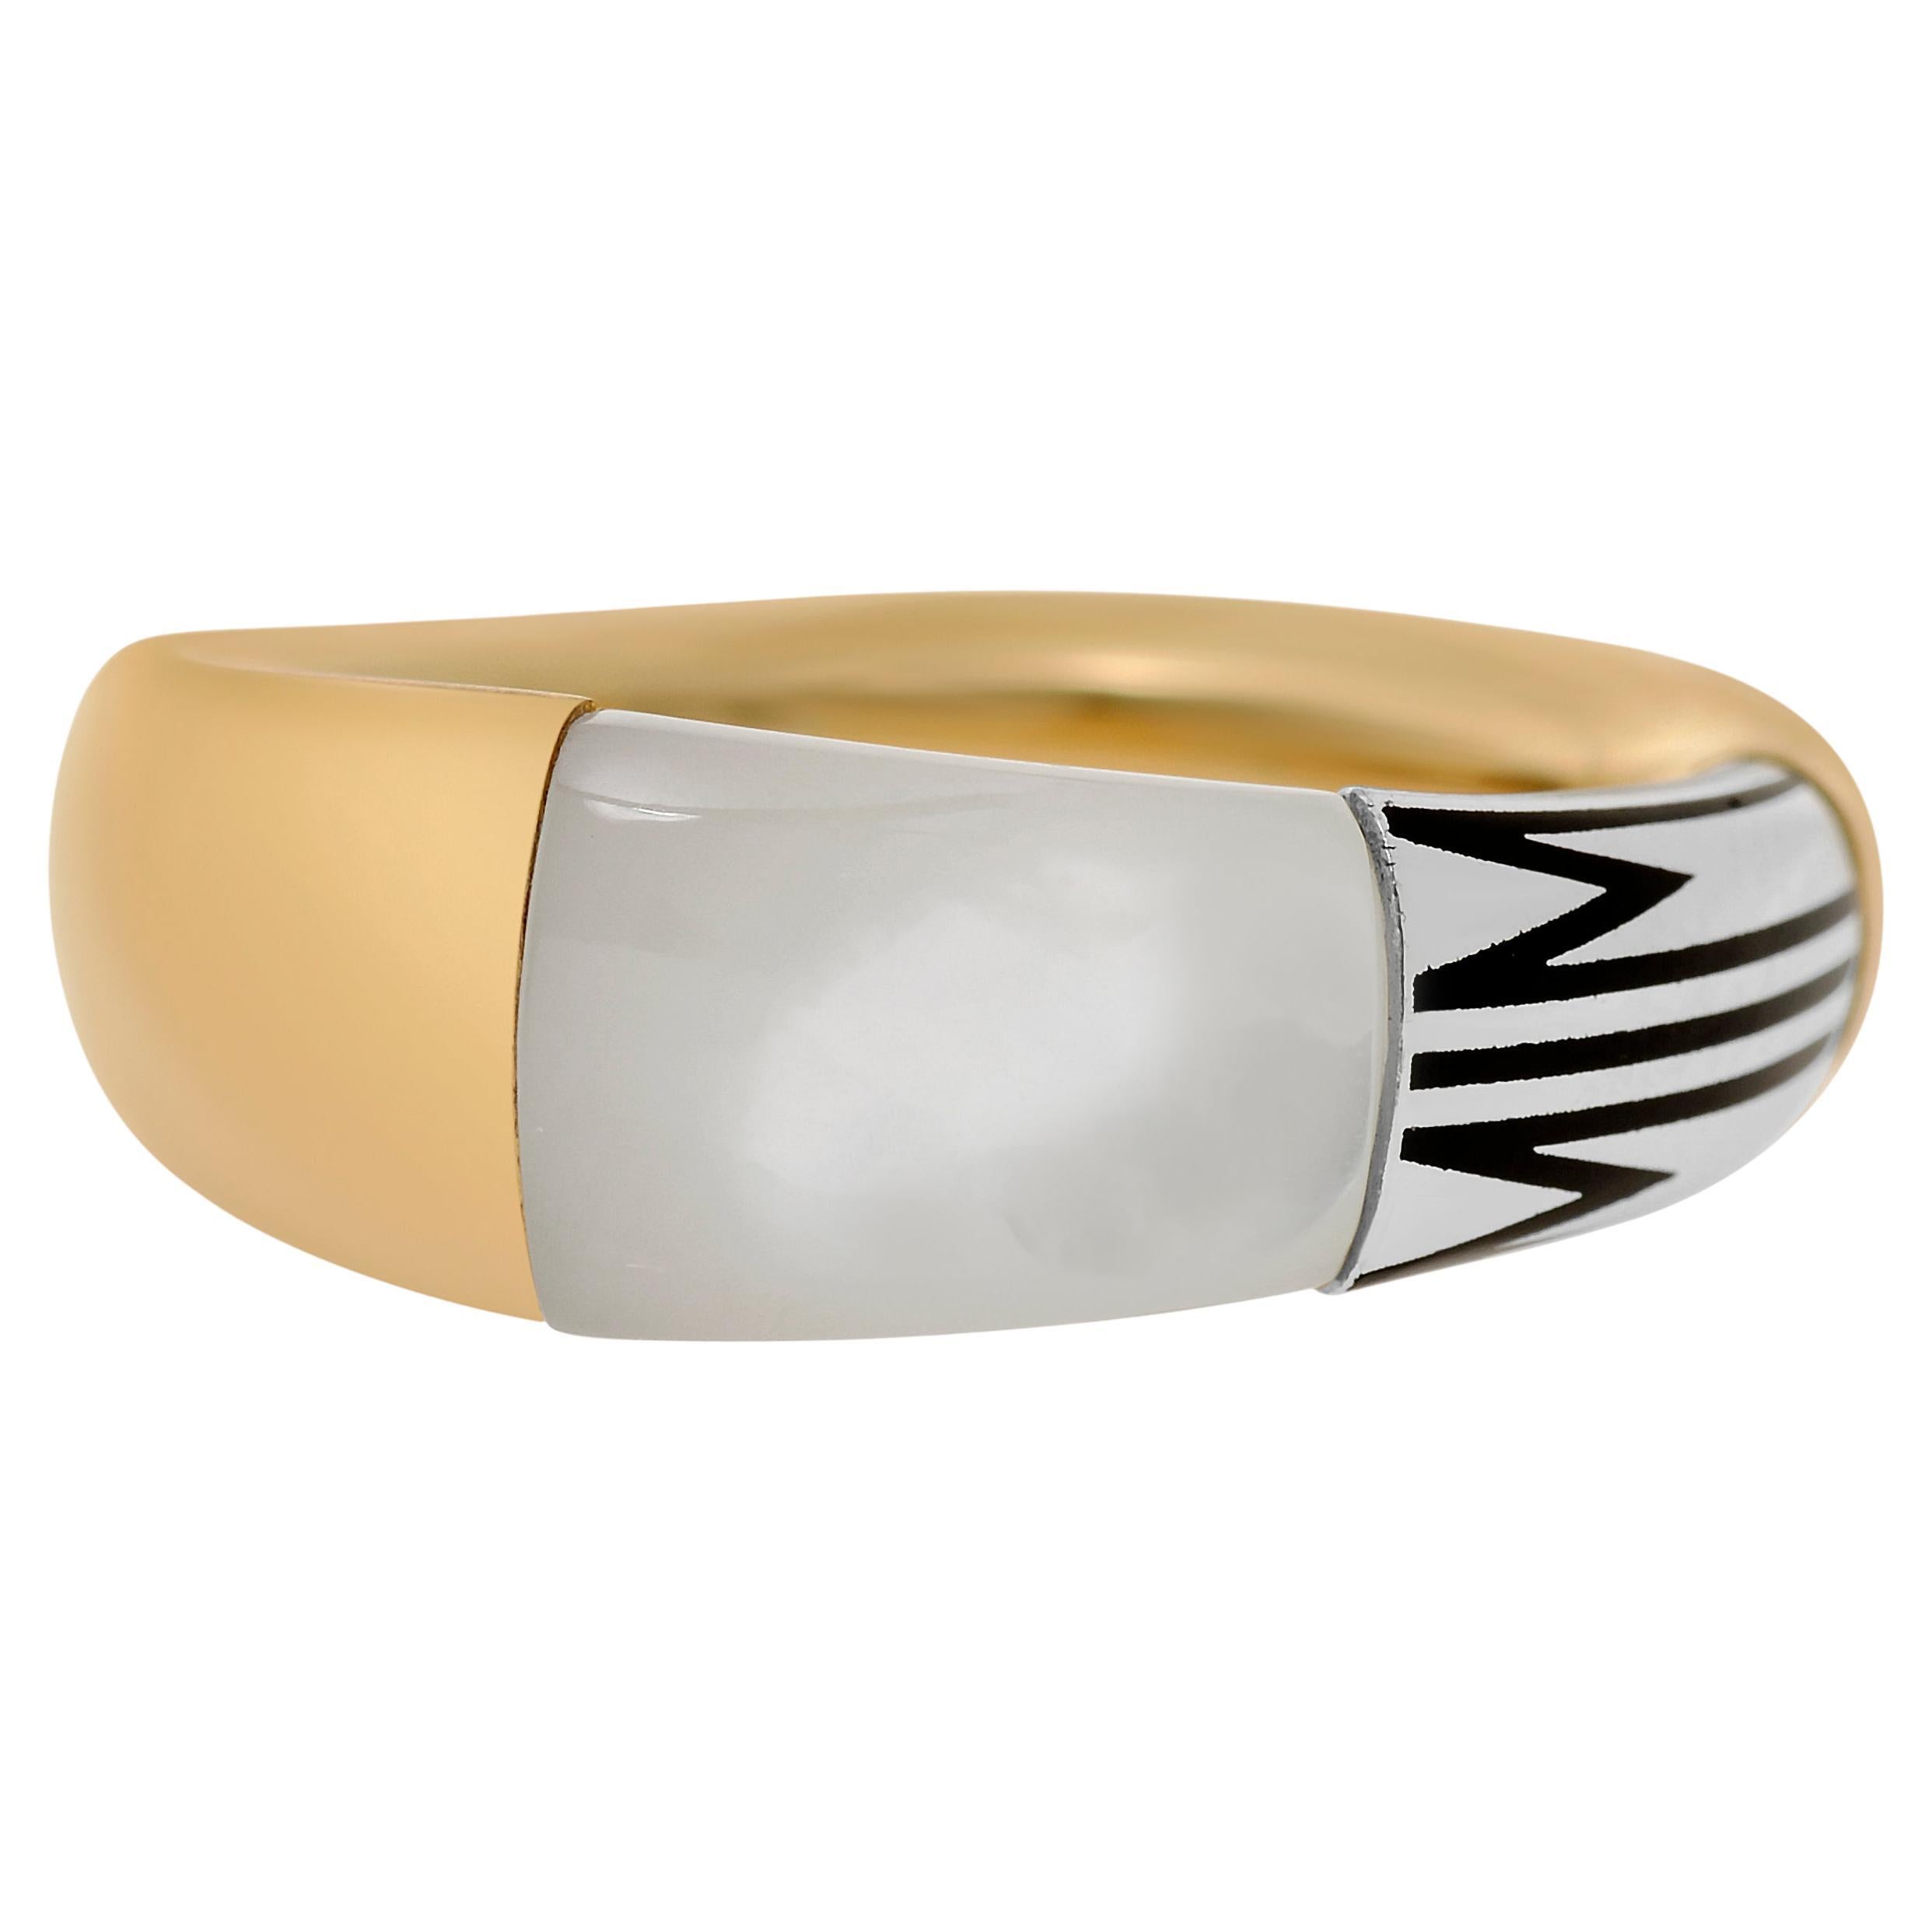 Mimi Milano Tam Tam 18K Yellow & White Gold, MoP Ring sz 6.5 For Sale